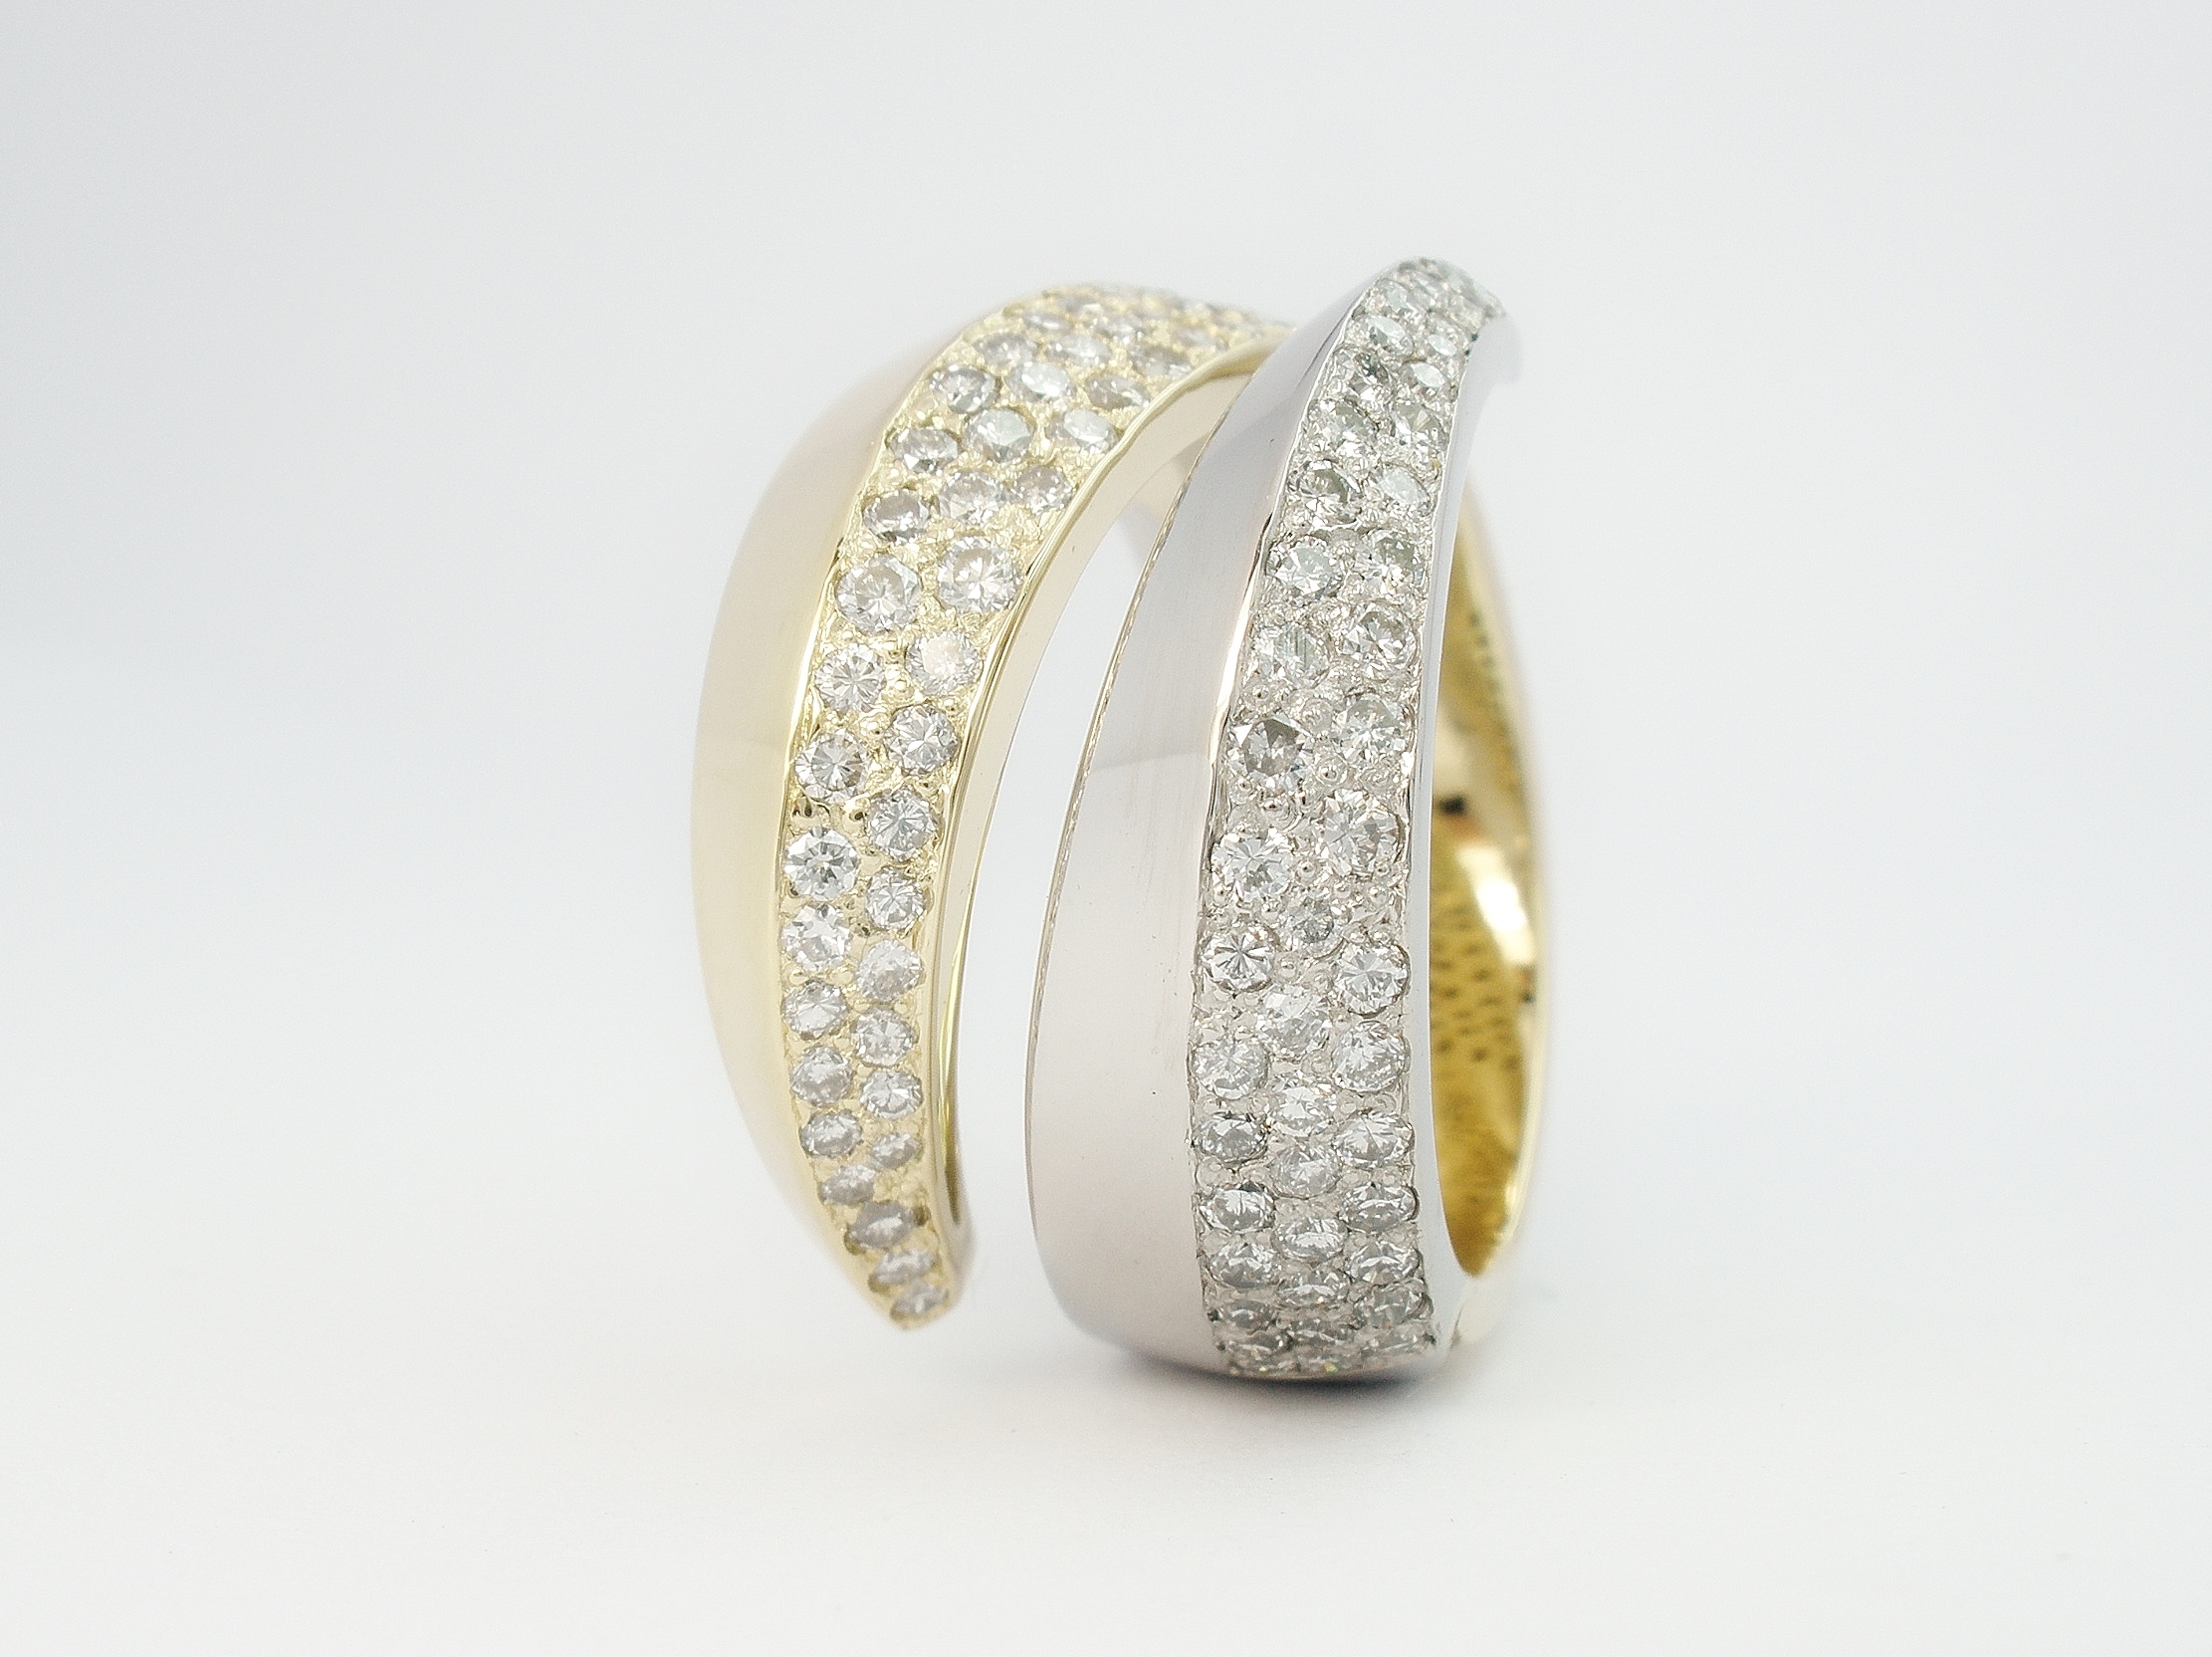 18ct. yellow gold & palladium pave set round brilliant cut diamond triangular sectioned wrap over ring.